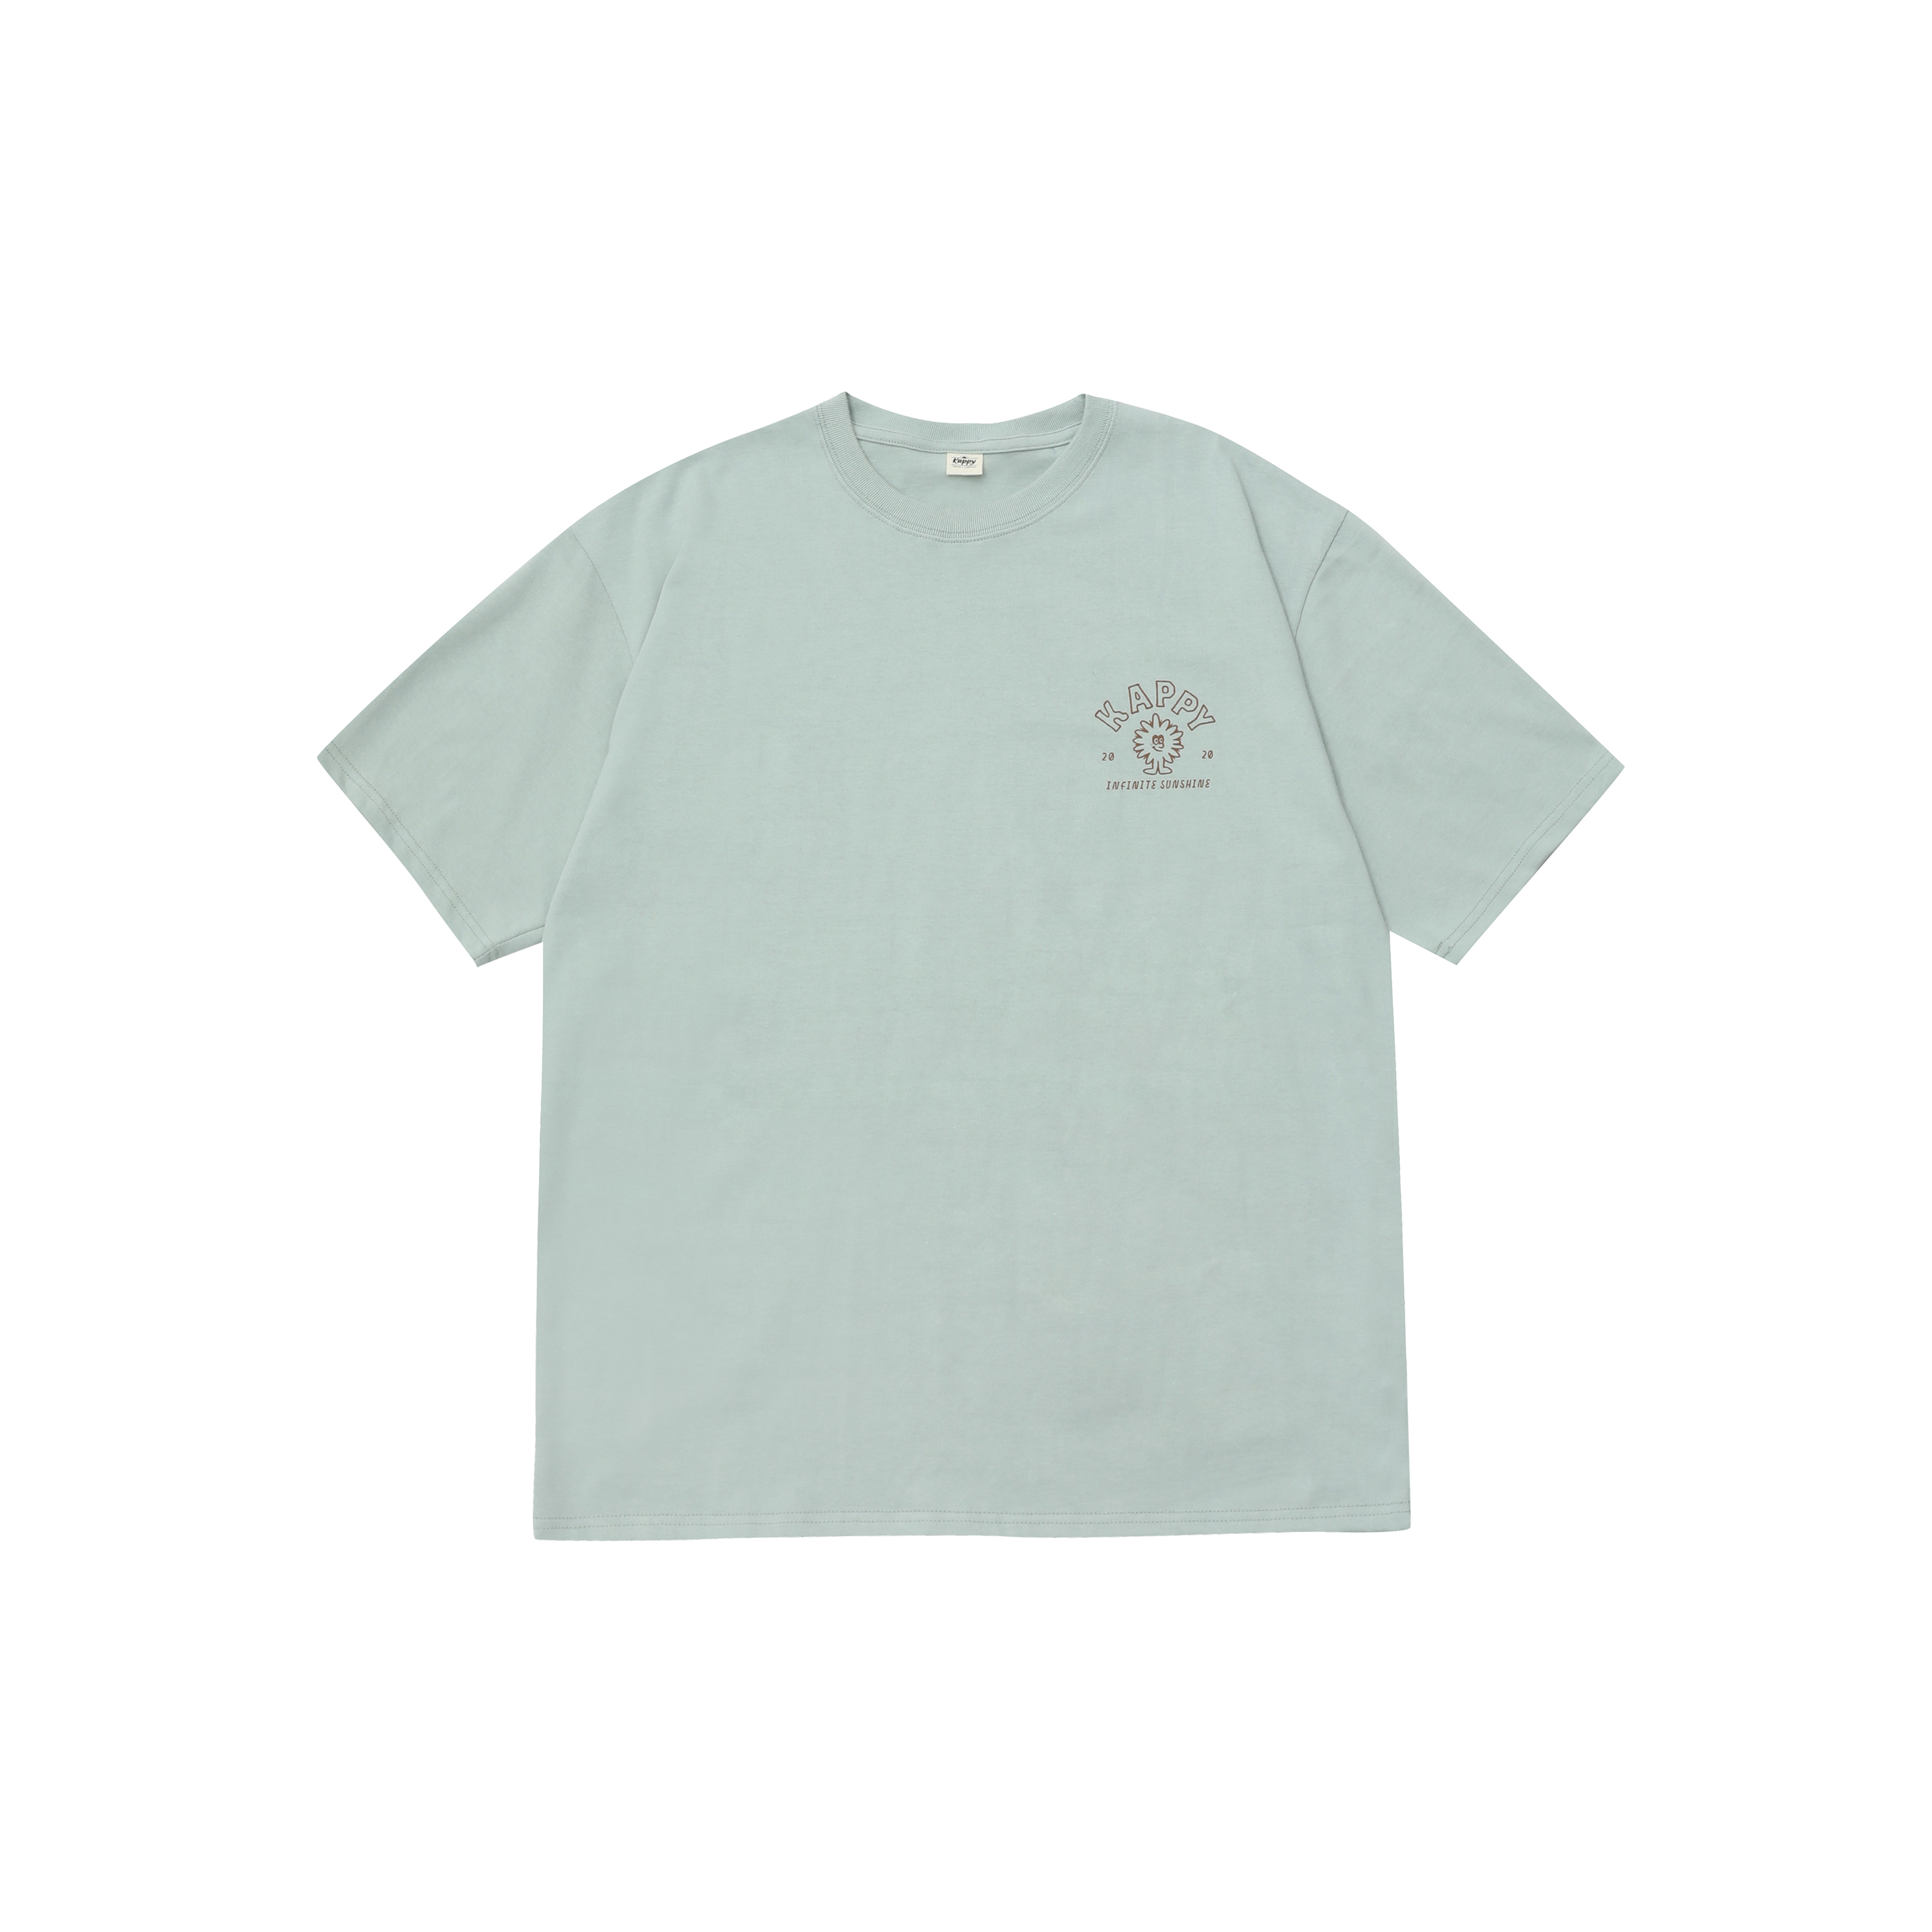 Kappy sunshine t-shirt mint